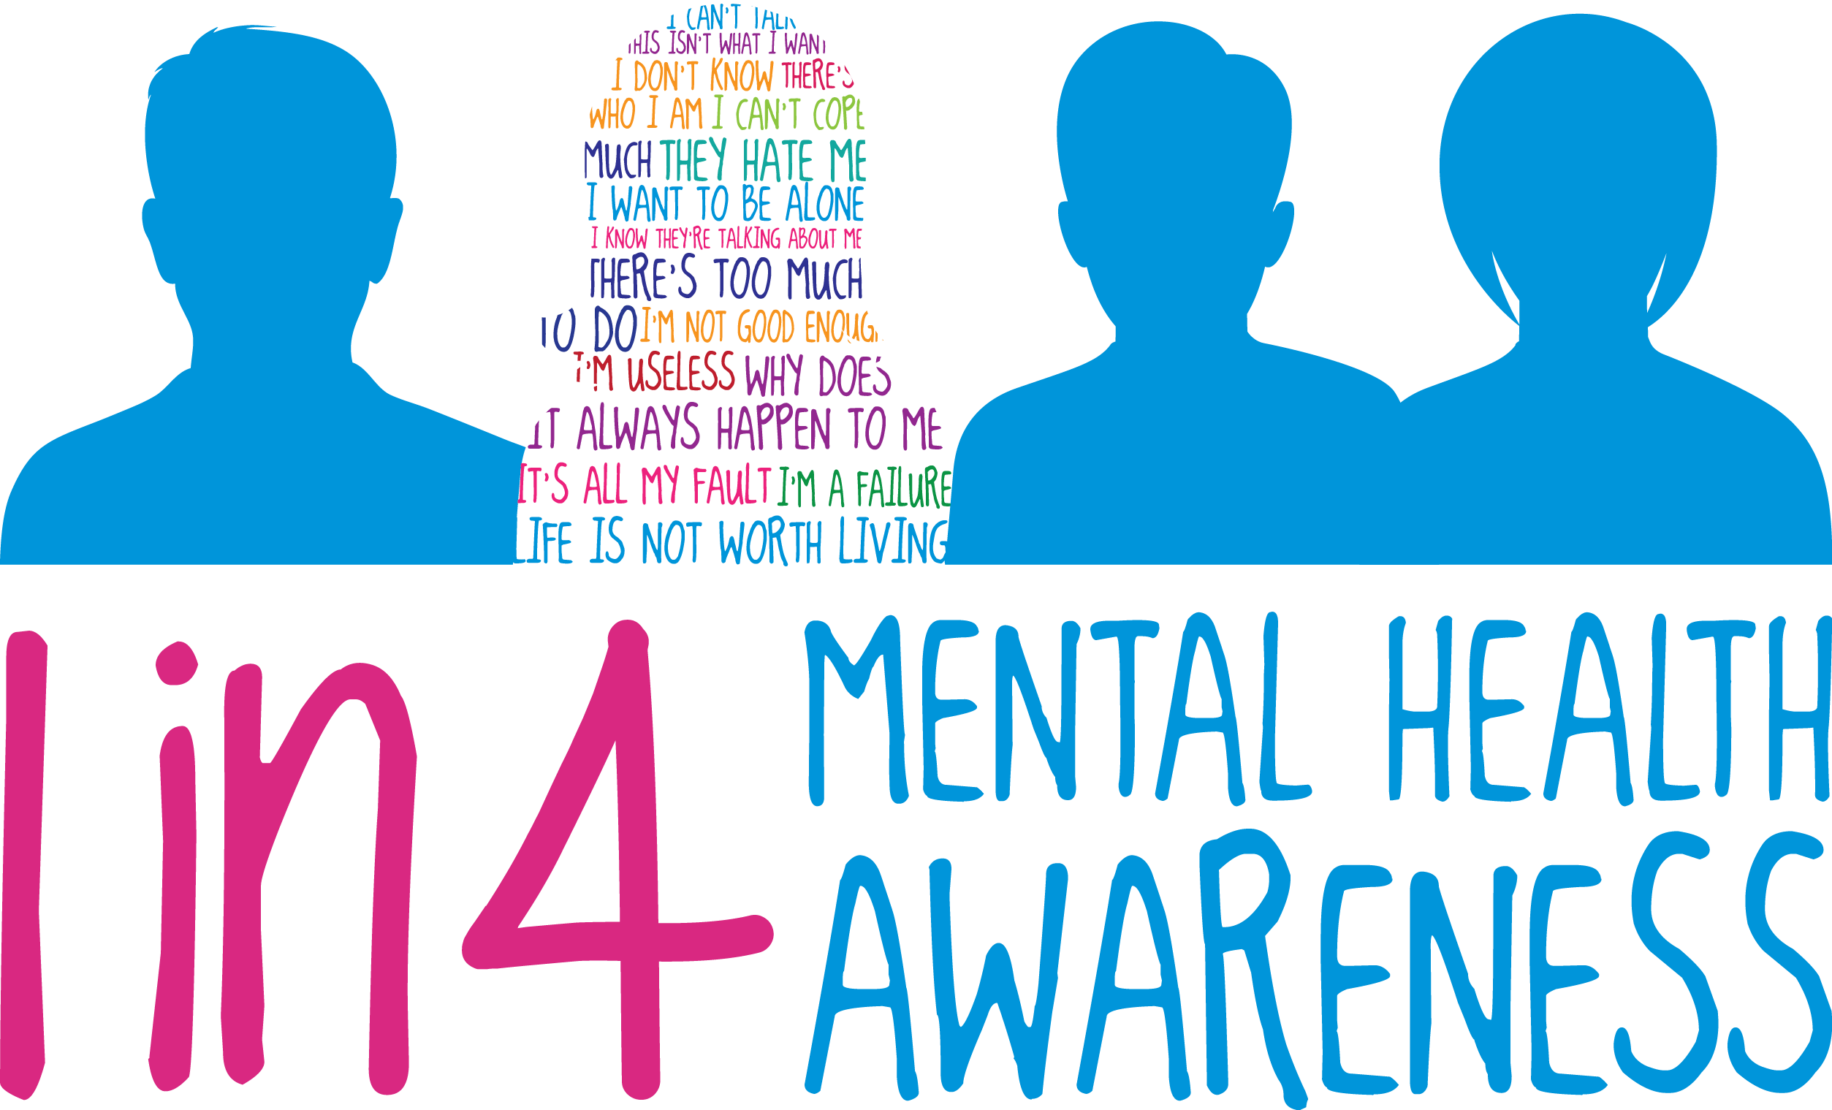 Mental Health Awareness Silhouettes PNG image